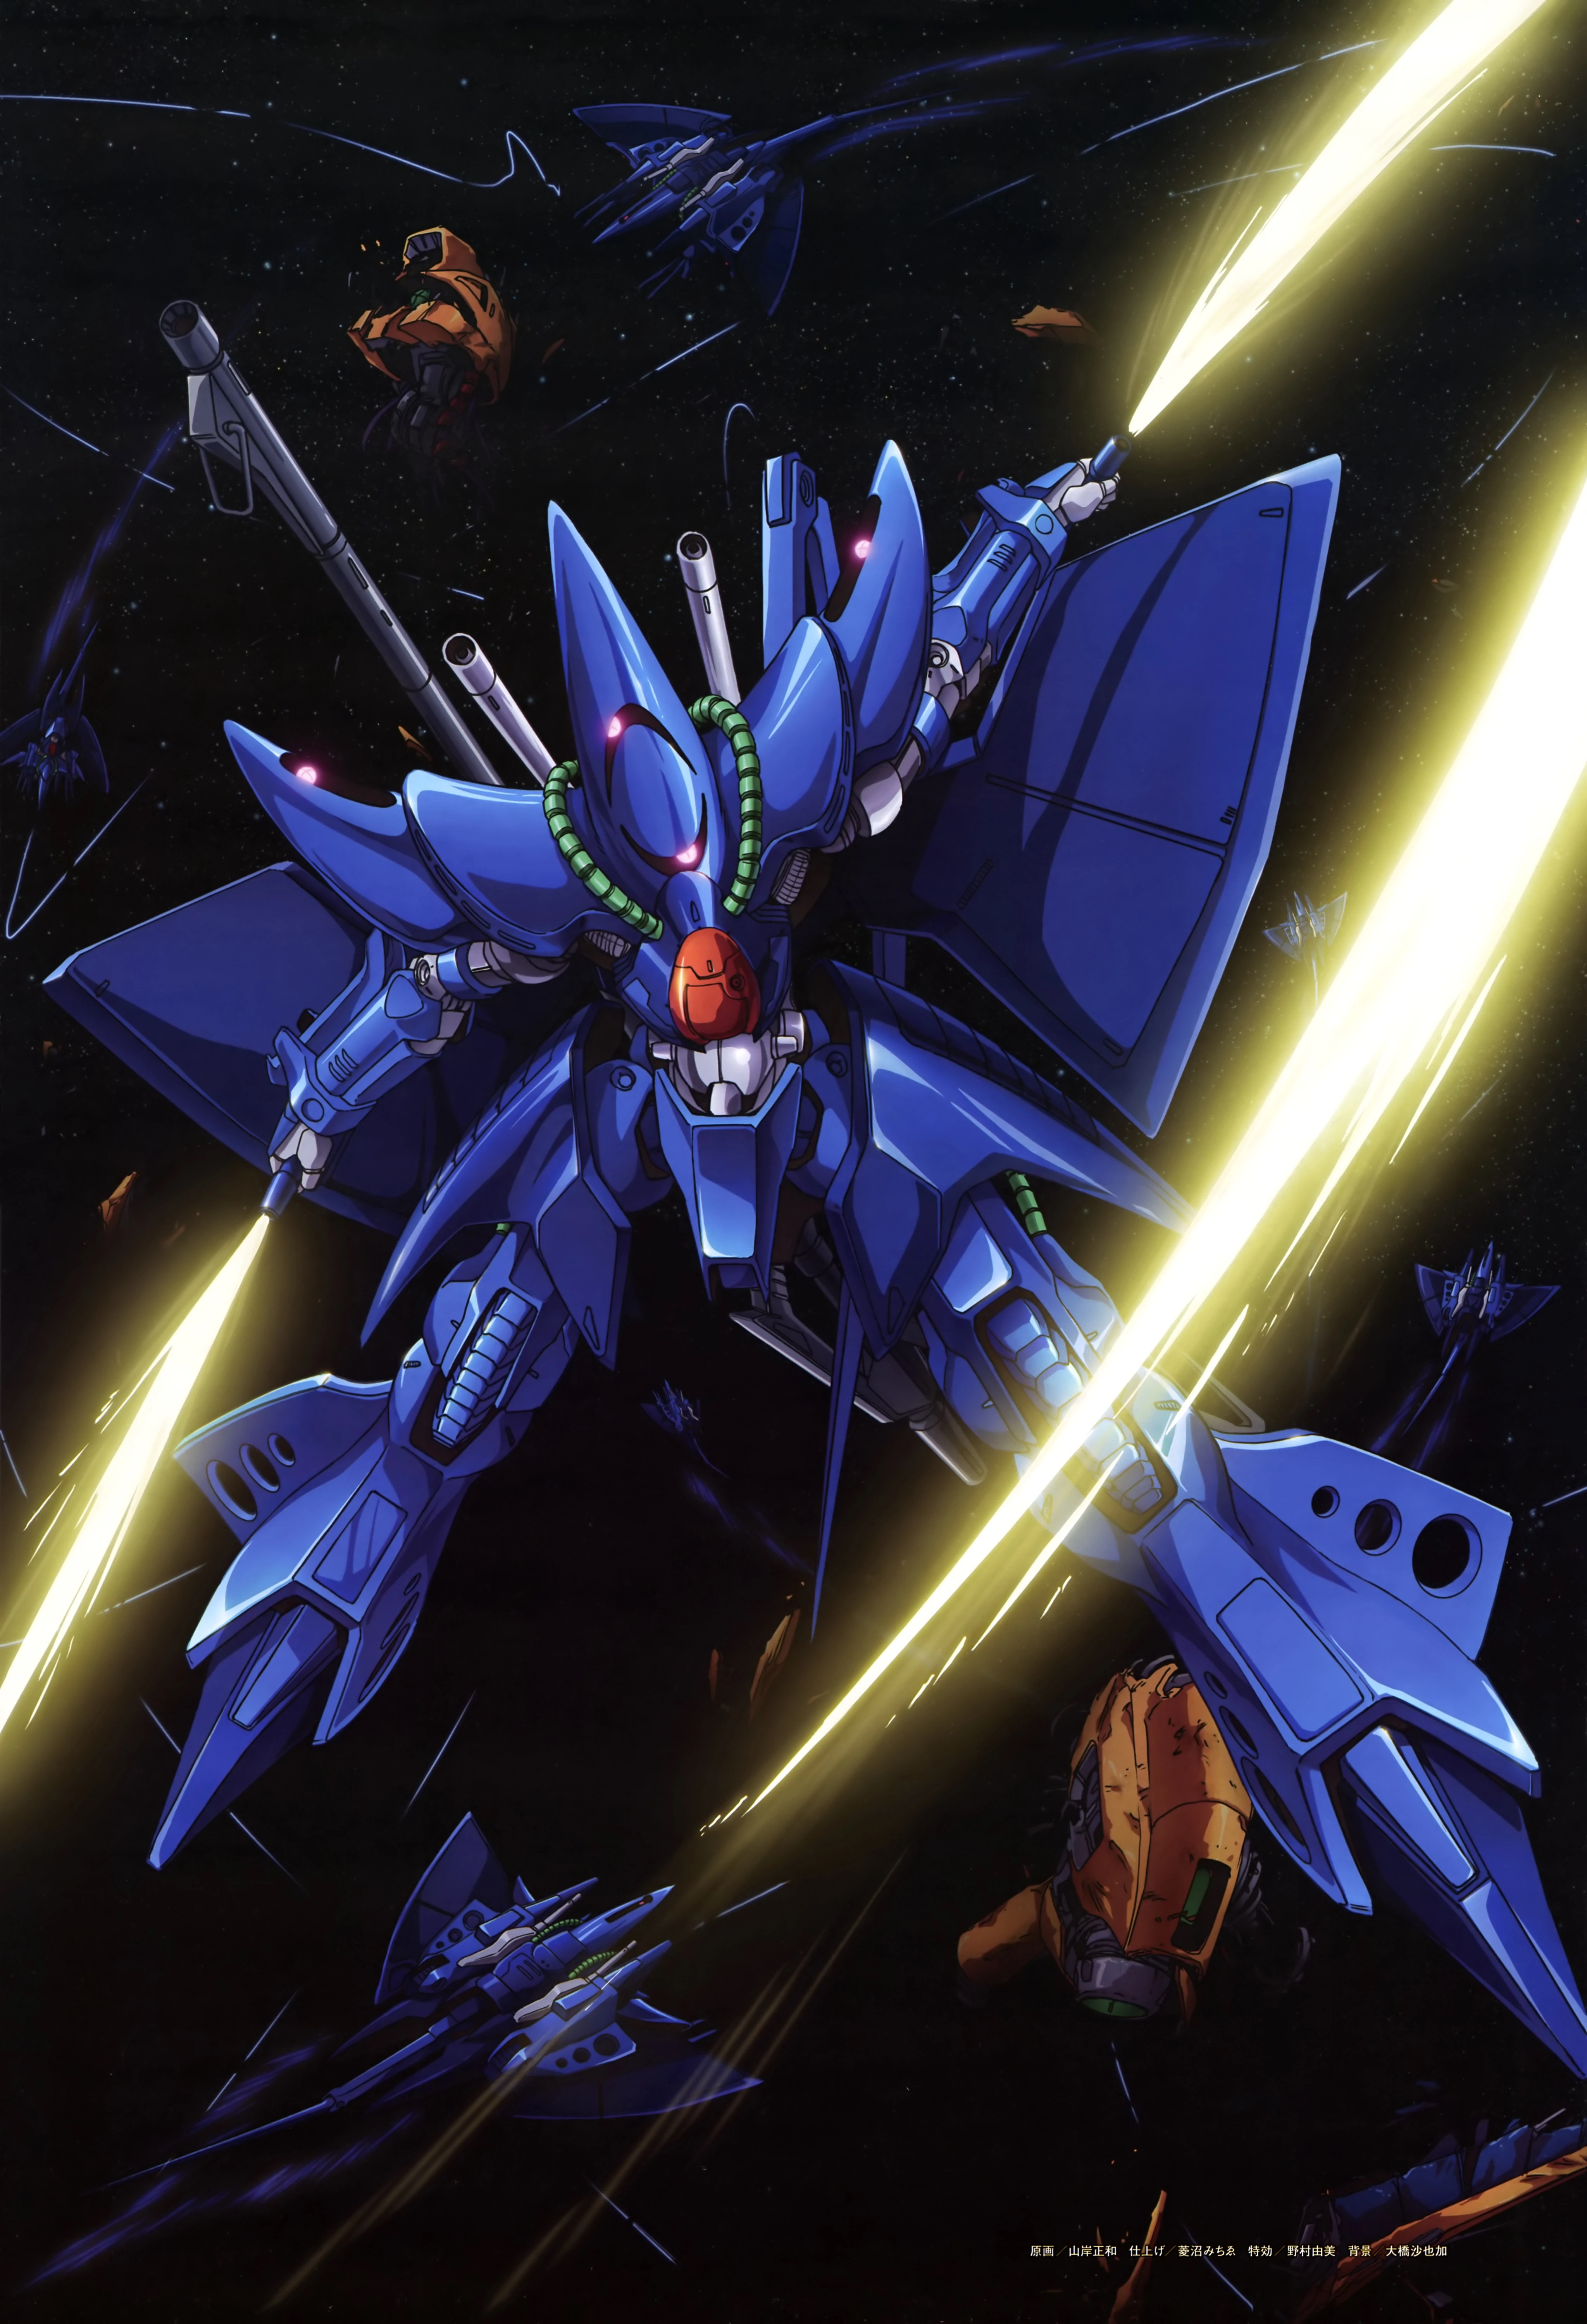 Anime 4095x5996 Hambrabi anime mechs Super Robot Taisen Mobile Suit Zeta Gundam Mobile Suit artwork digital art